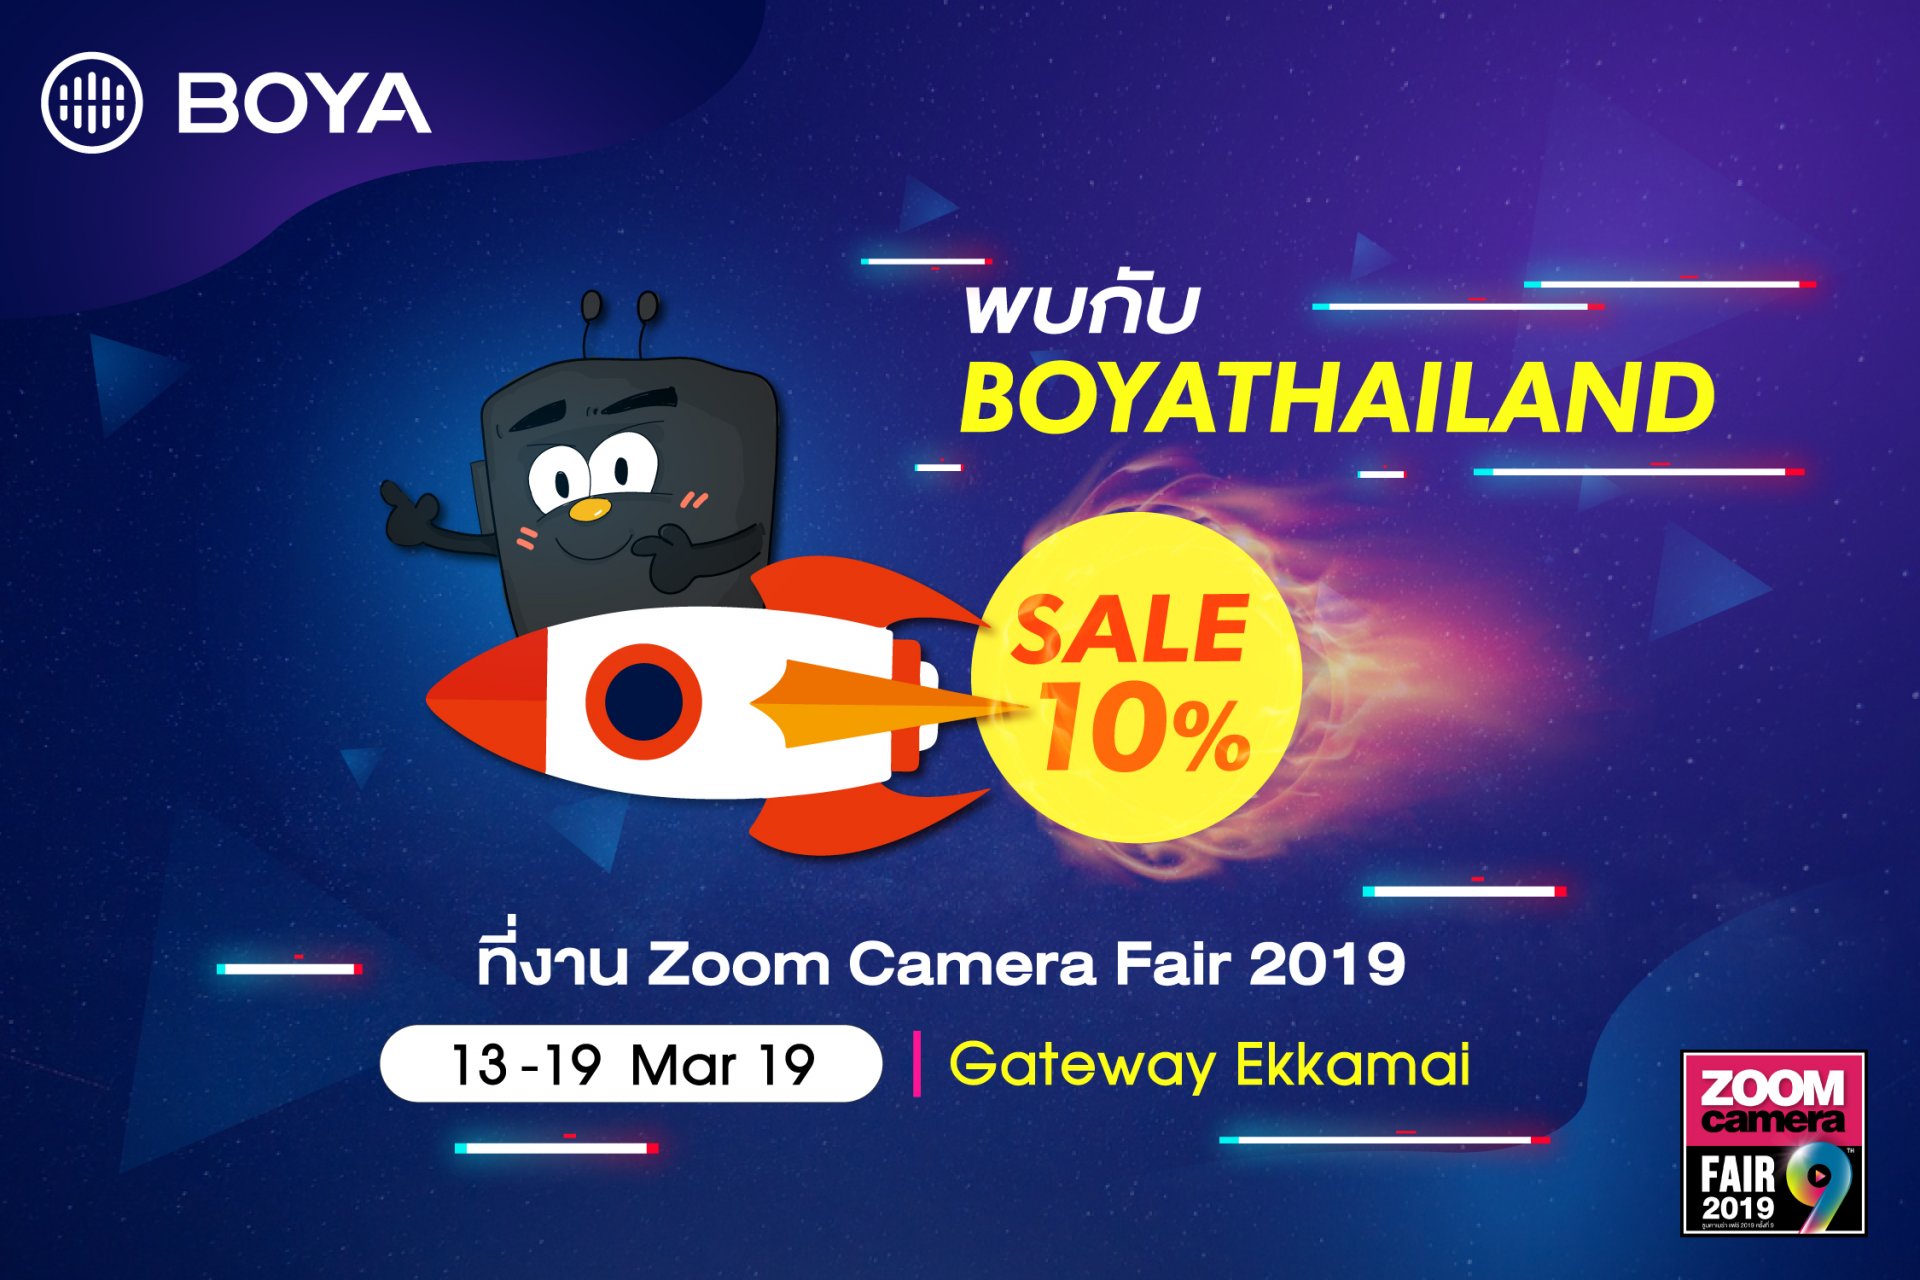  Boya Thailand x ZoomCamera Fair 9